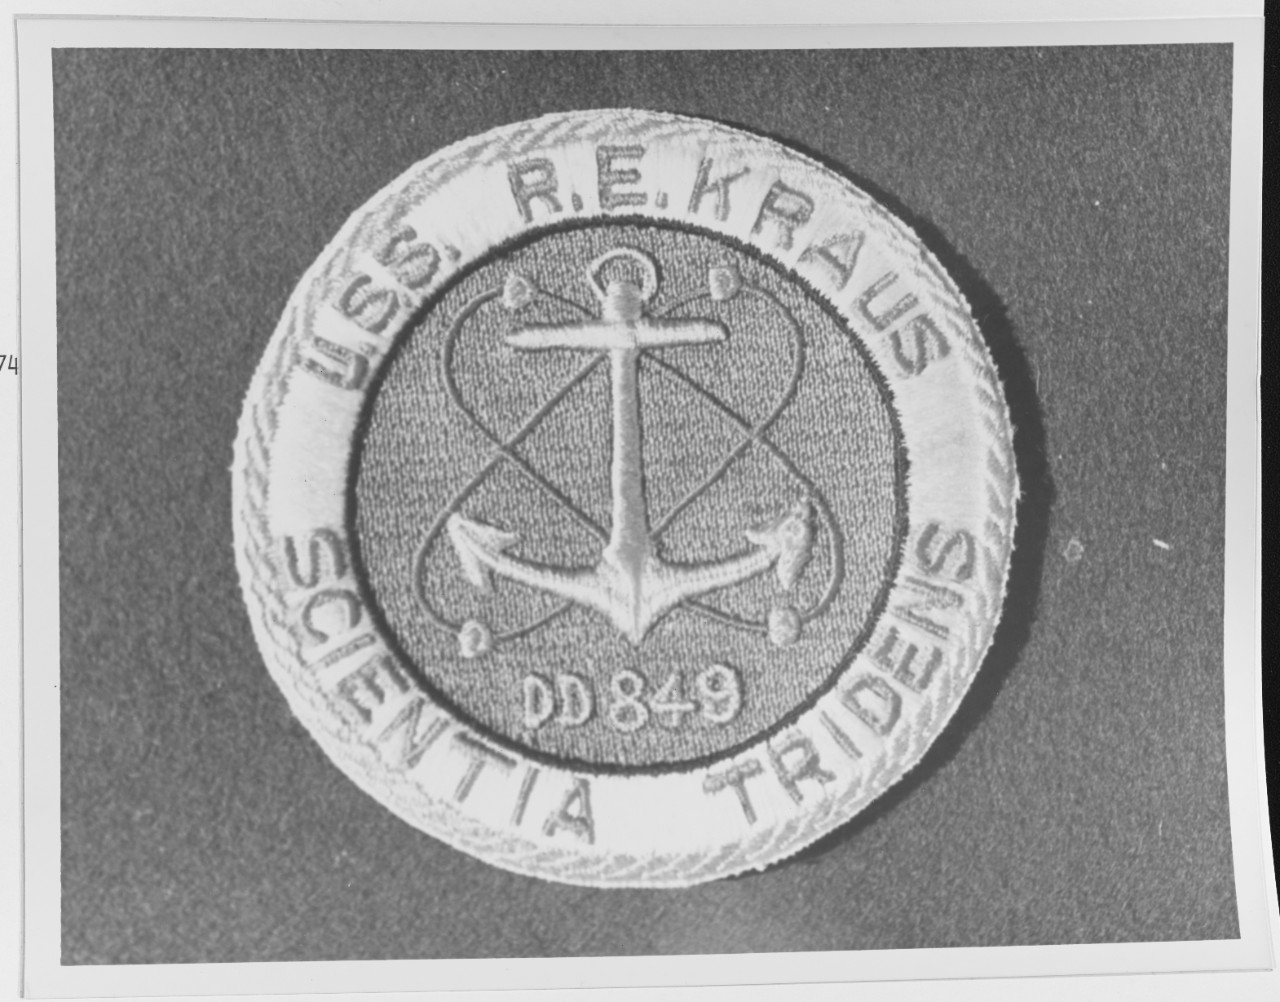 Insignia: USS RICHARD E. KRAUS (DD-849)